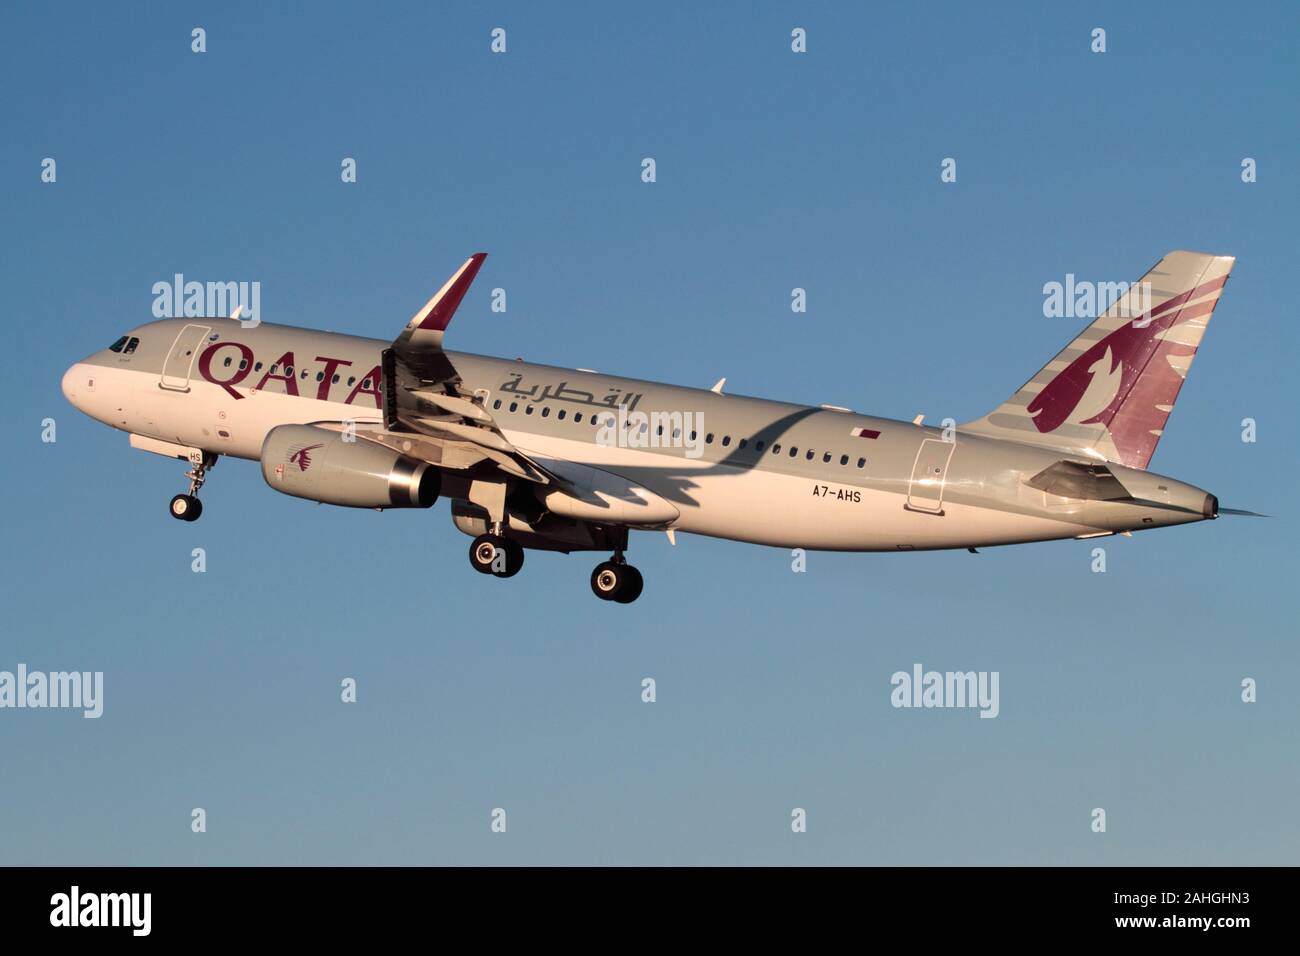 Qatar Airways Airbus A320-200 passenger jet airplane climbing on takeoff against a blue sky. Modern aviation. Stock Photo